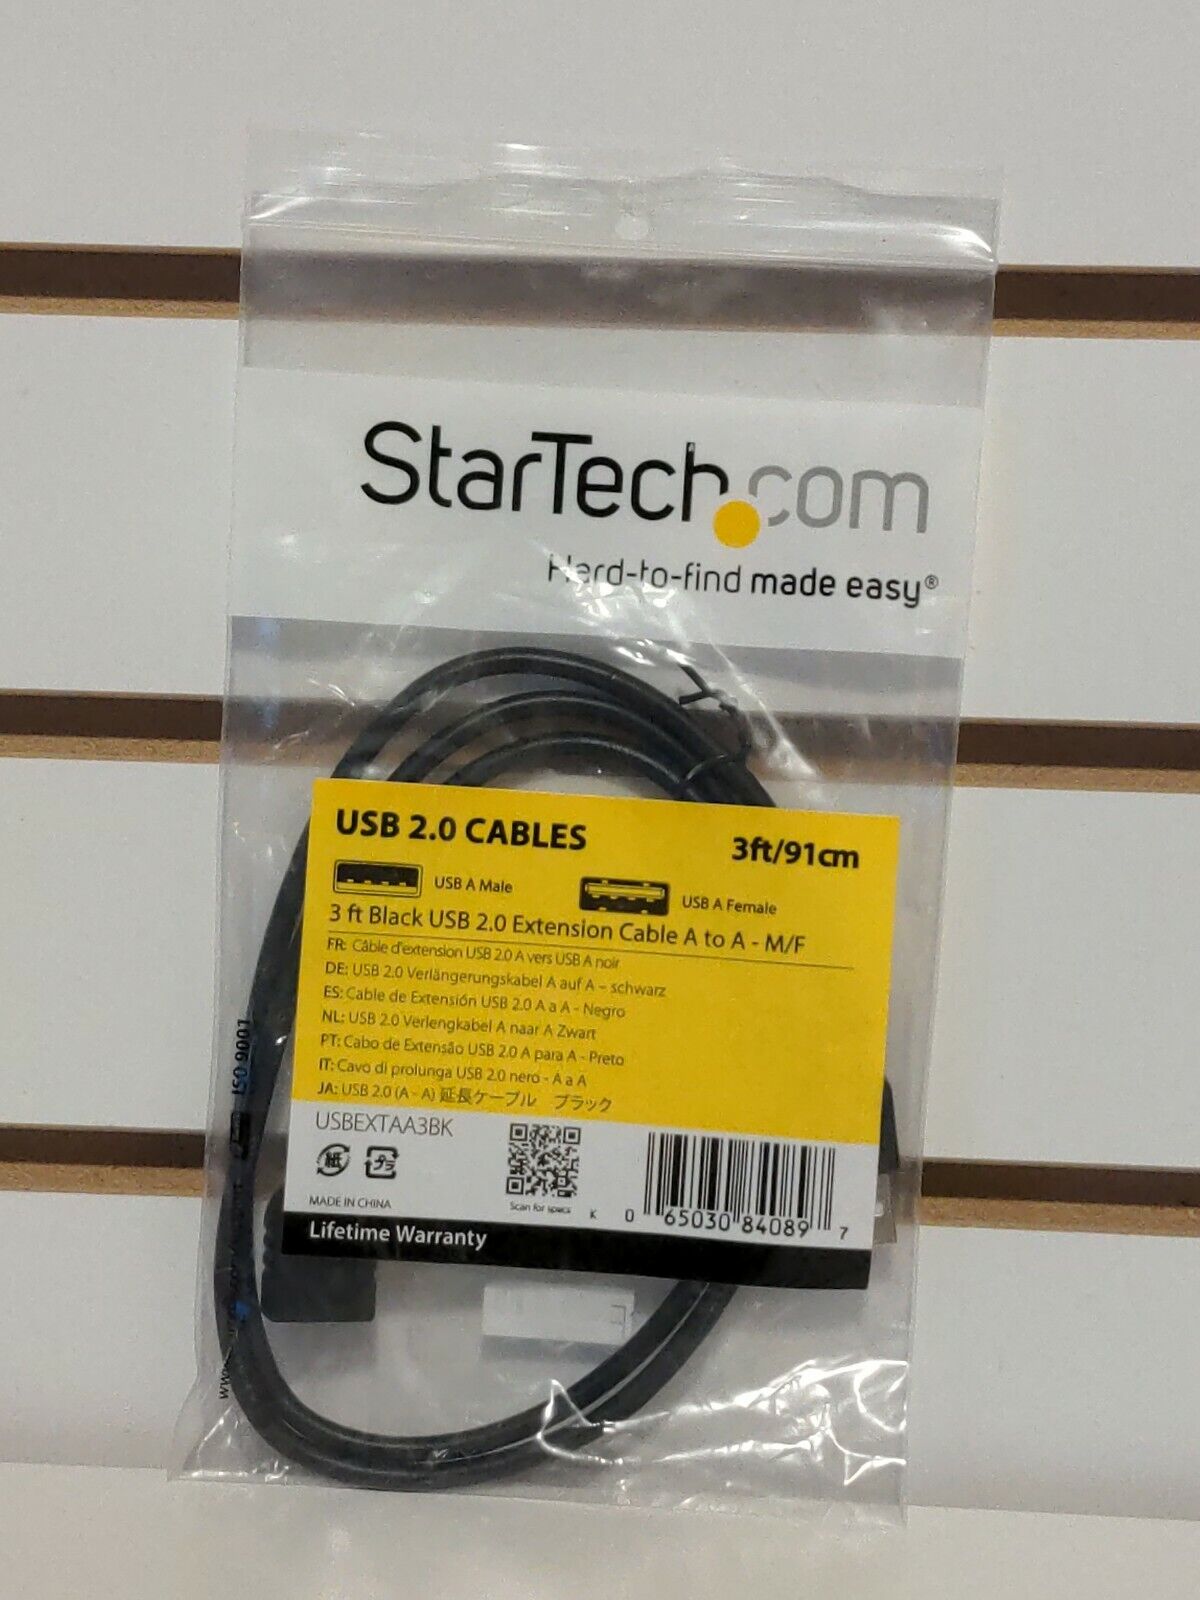 StarTech.Com USB 2.0 Cables 3ft. USBEXTAA3BK